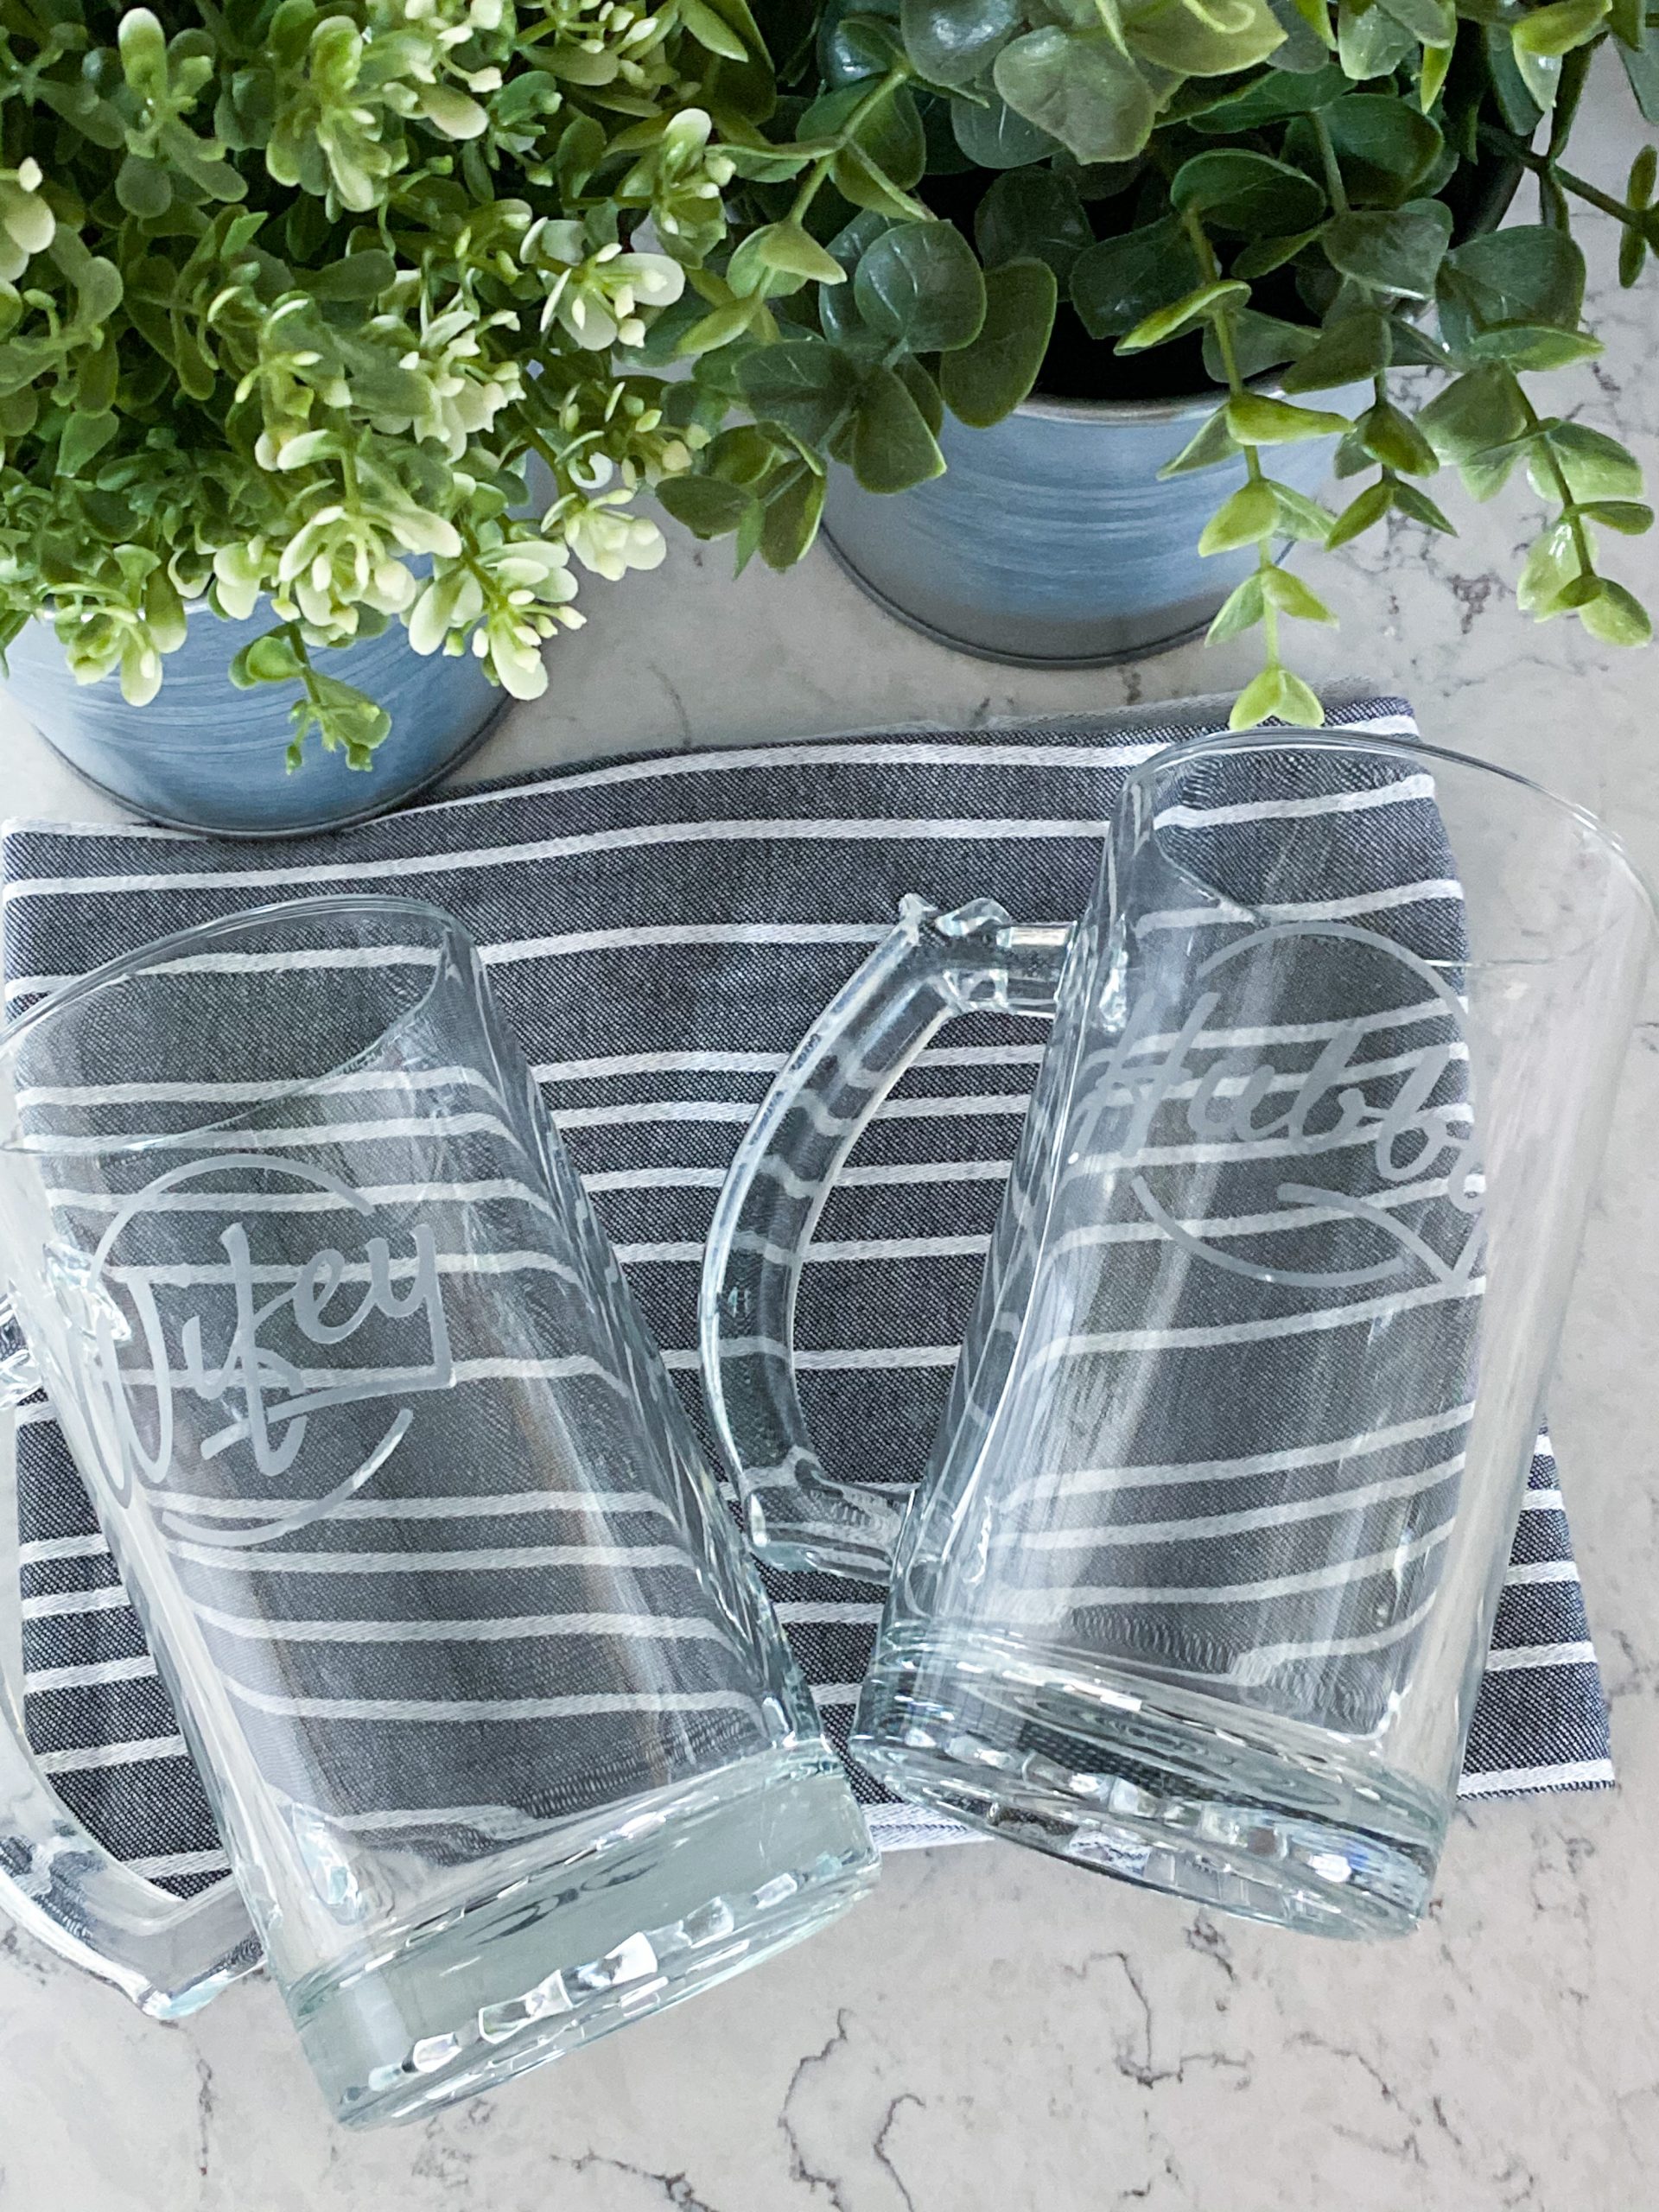 DIY Glass Etching Designs Wedding Gift Ideas